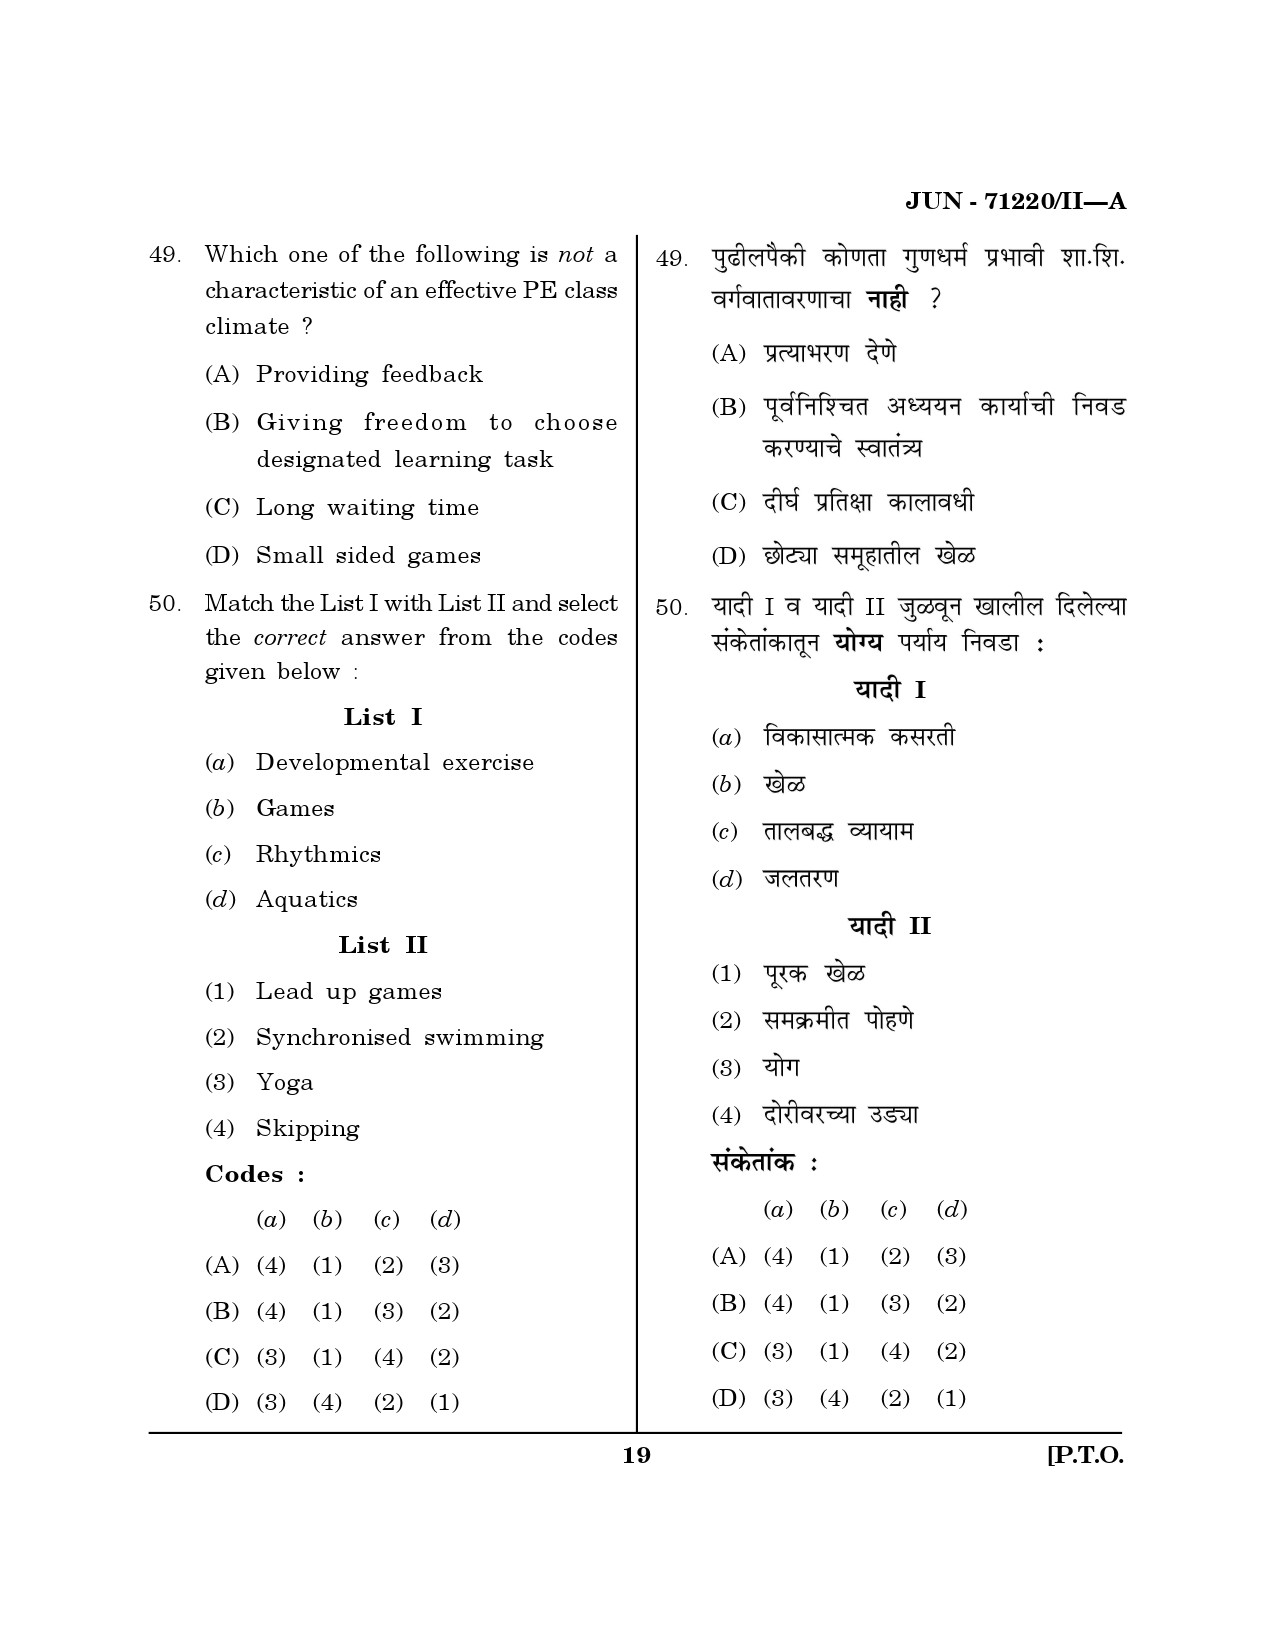 Maharashtra SET Physical Education Question Paper II June 2020 18